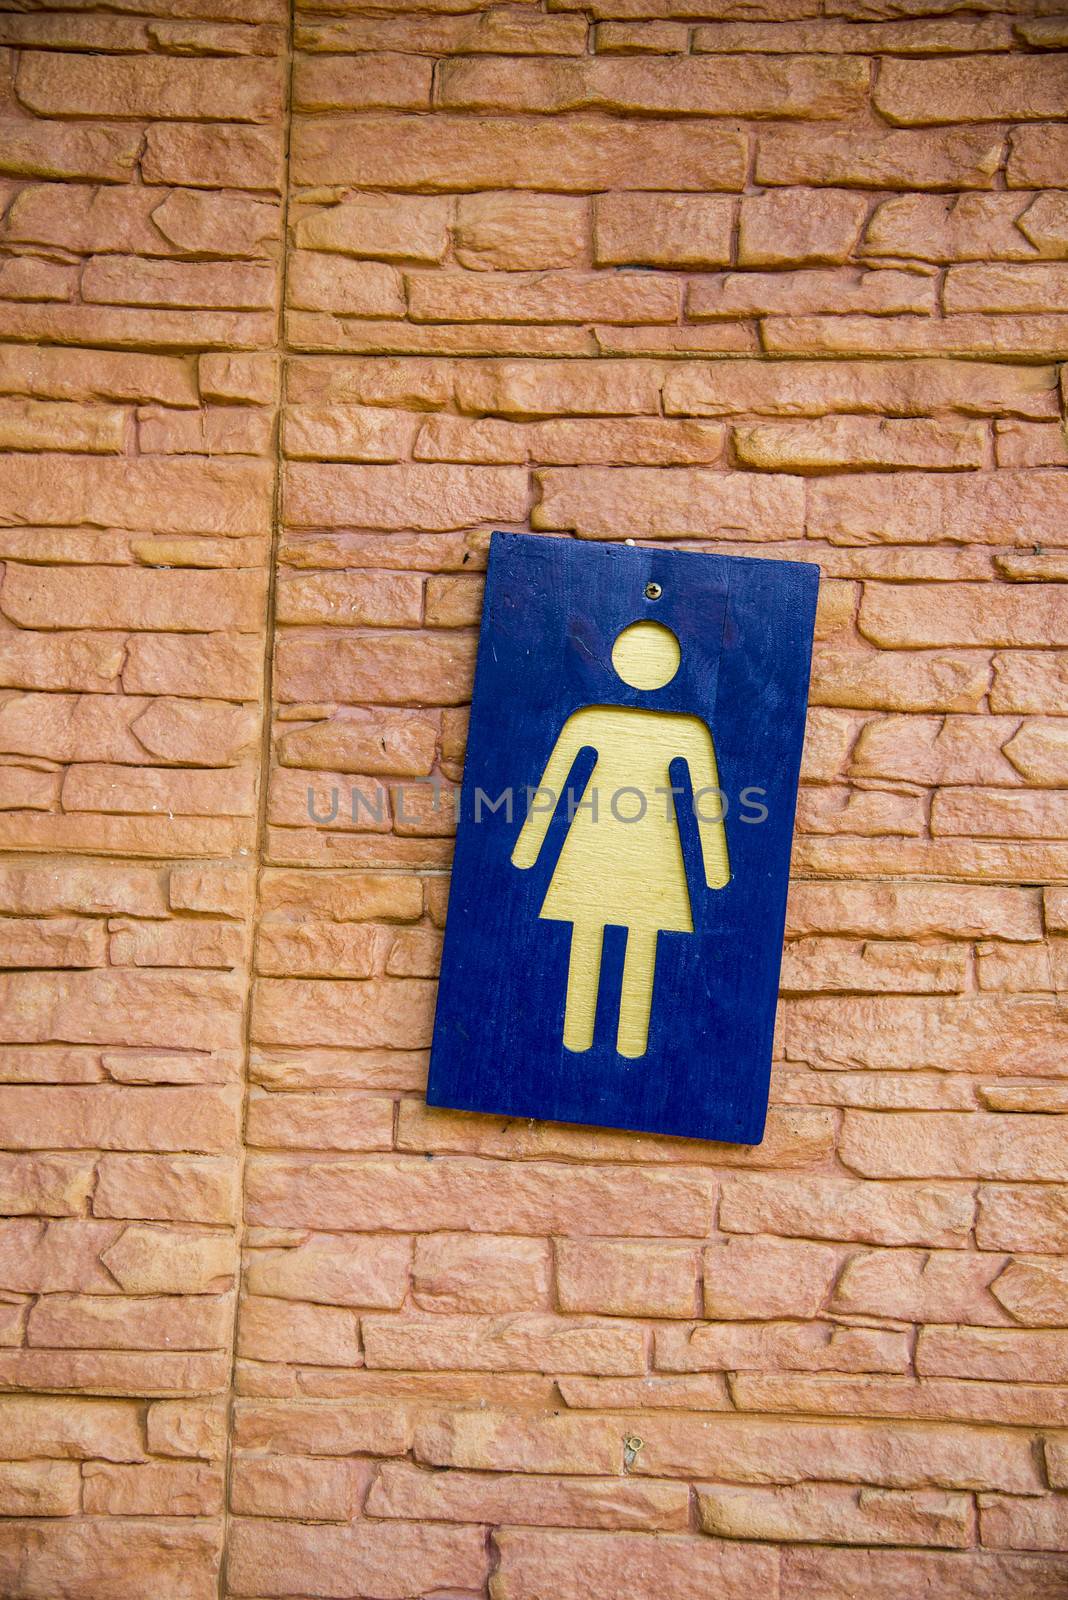 Lady toilet sign on the wall1 by gjeerawut